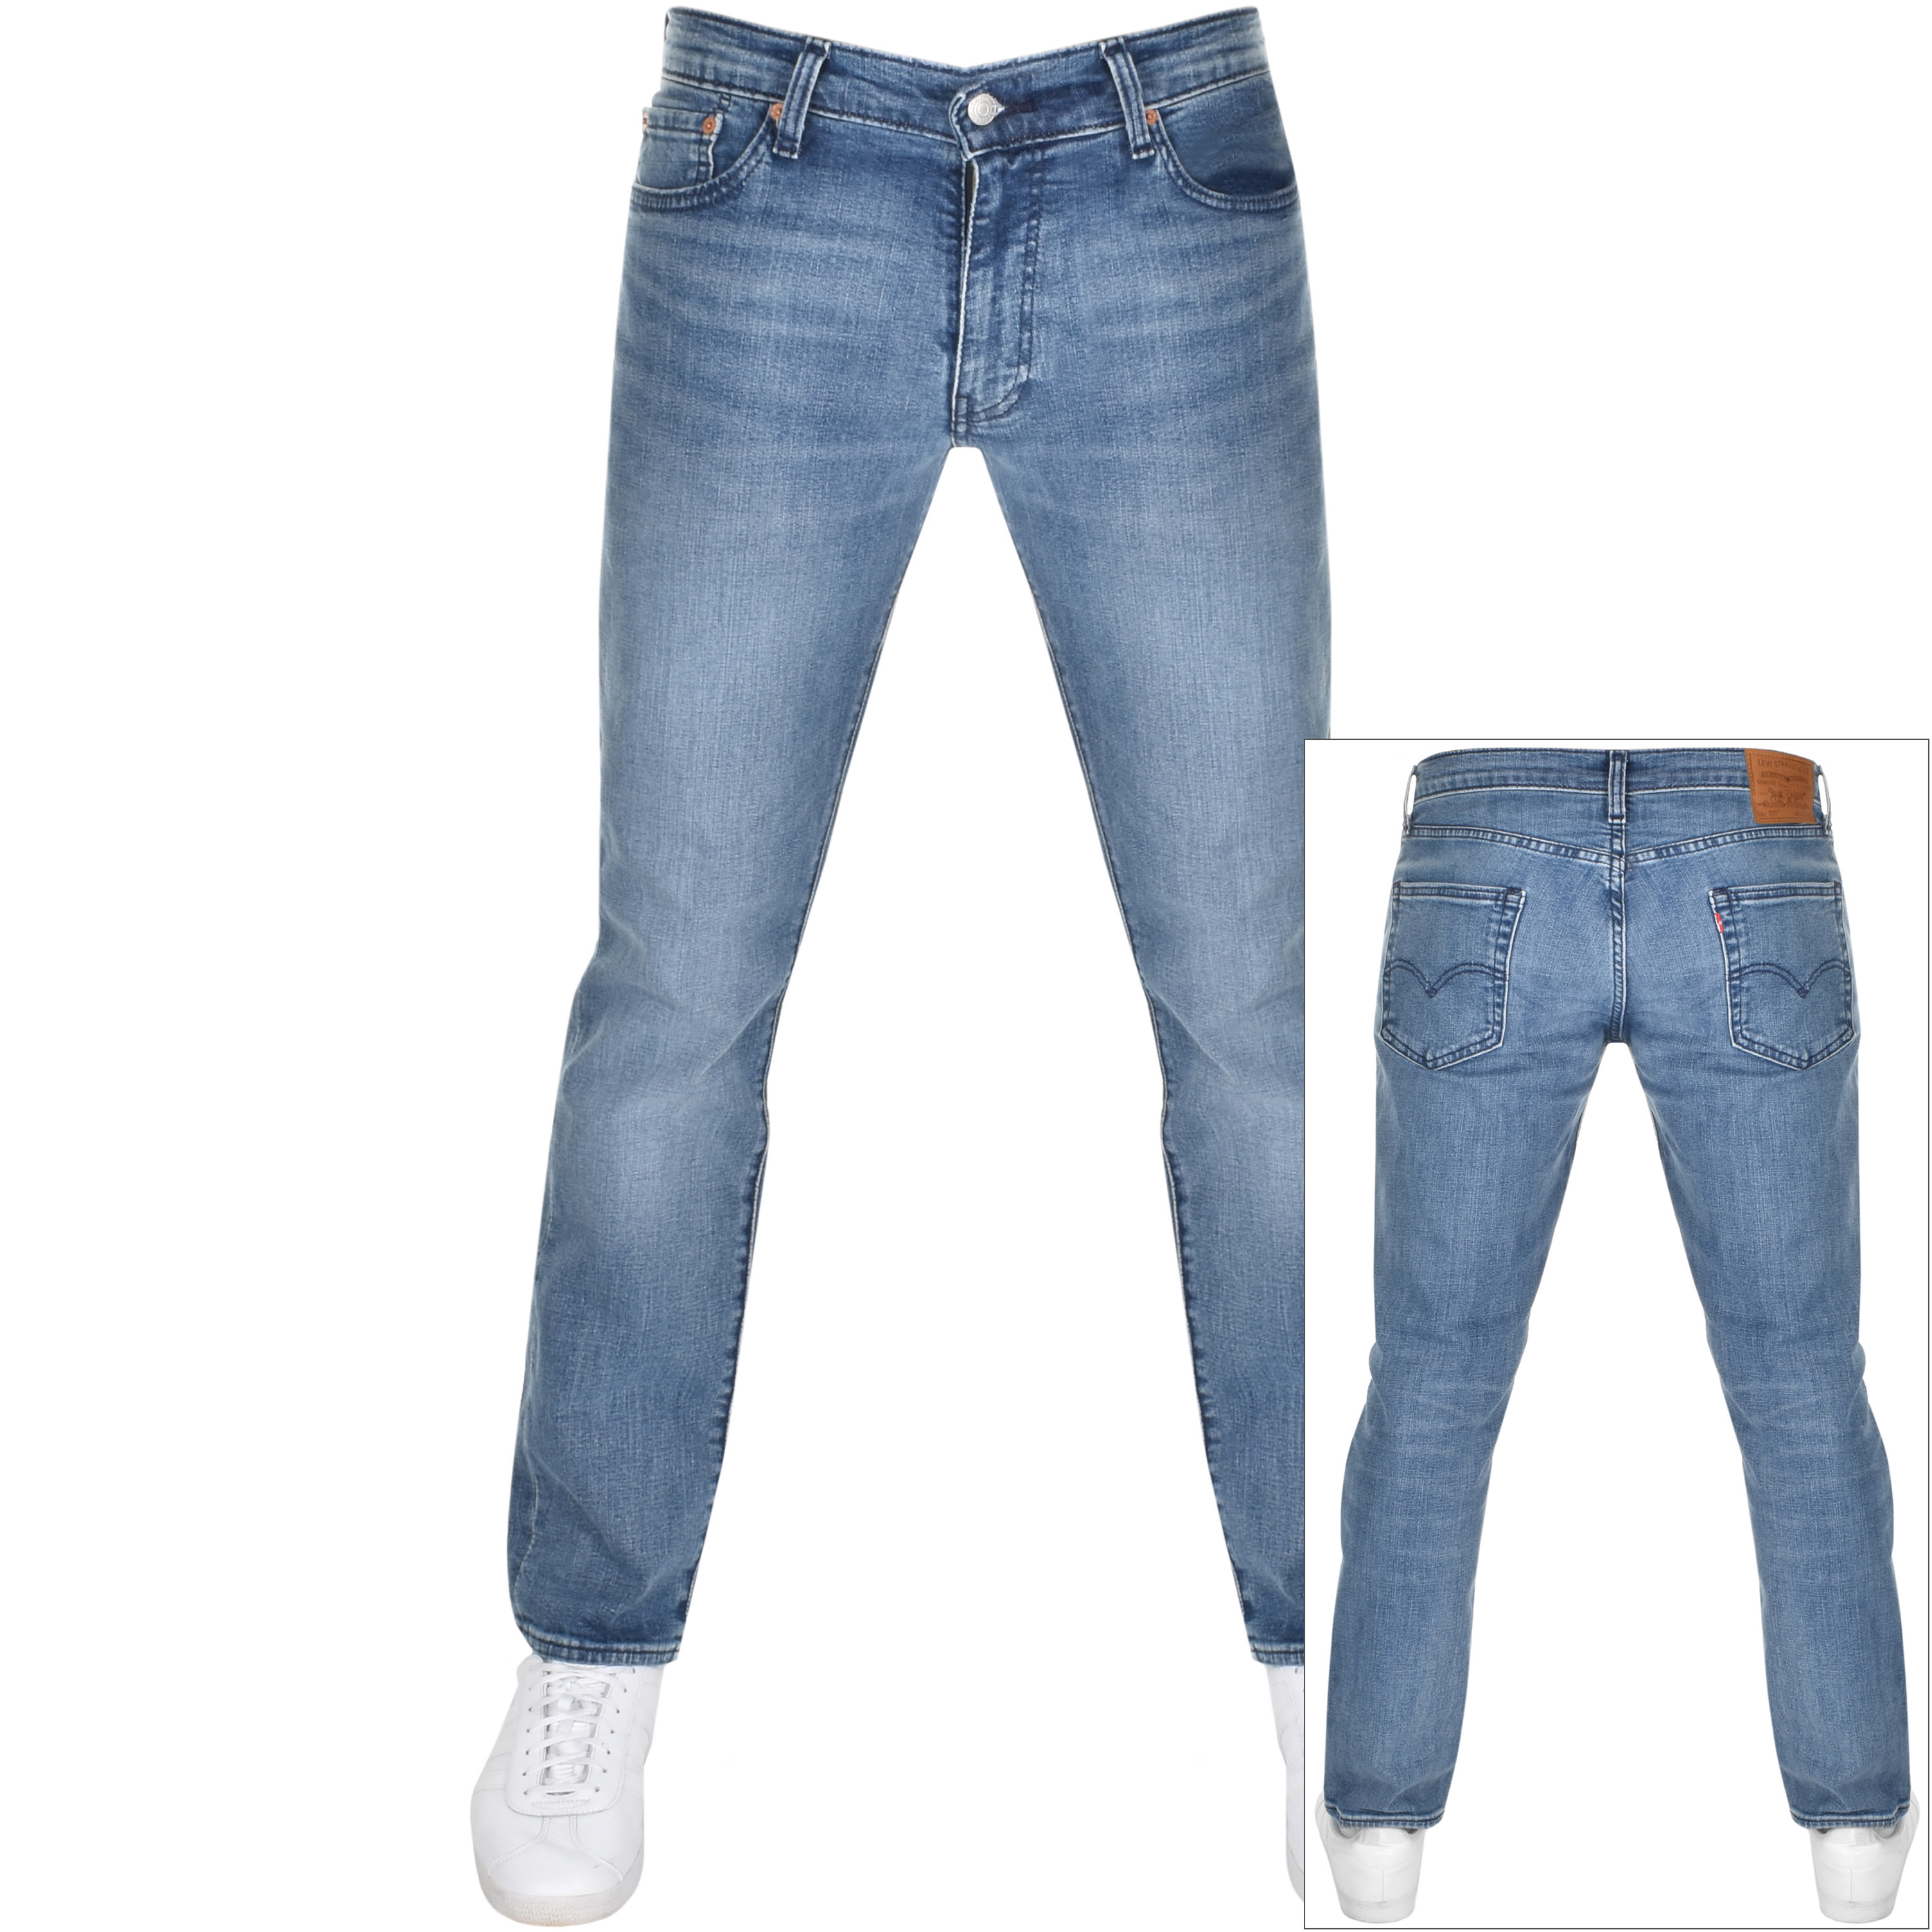 jeans levi's 511 slim online -